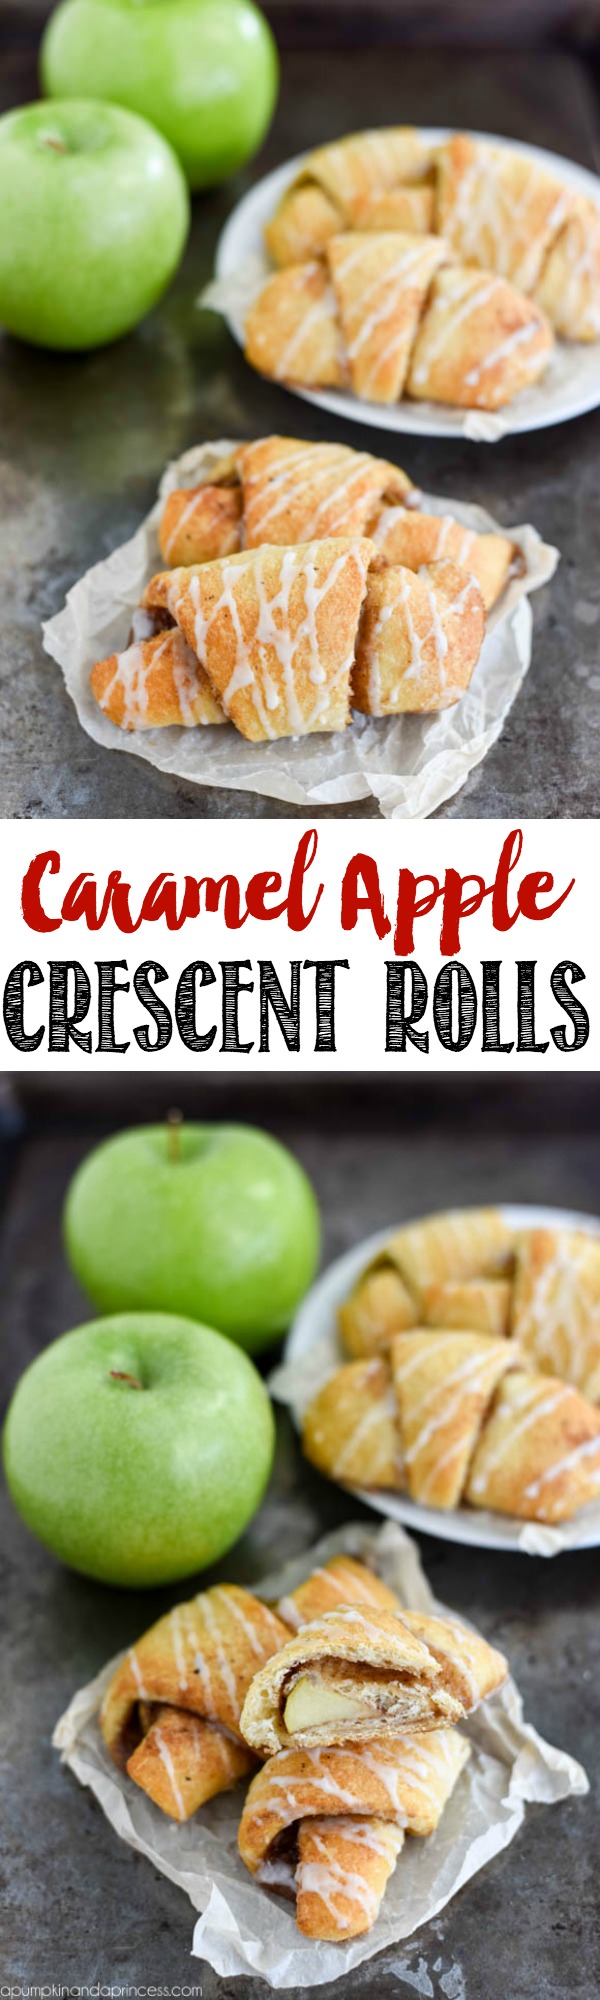 Caramel Apple Crescent Rolls